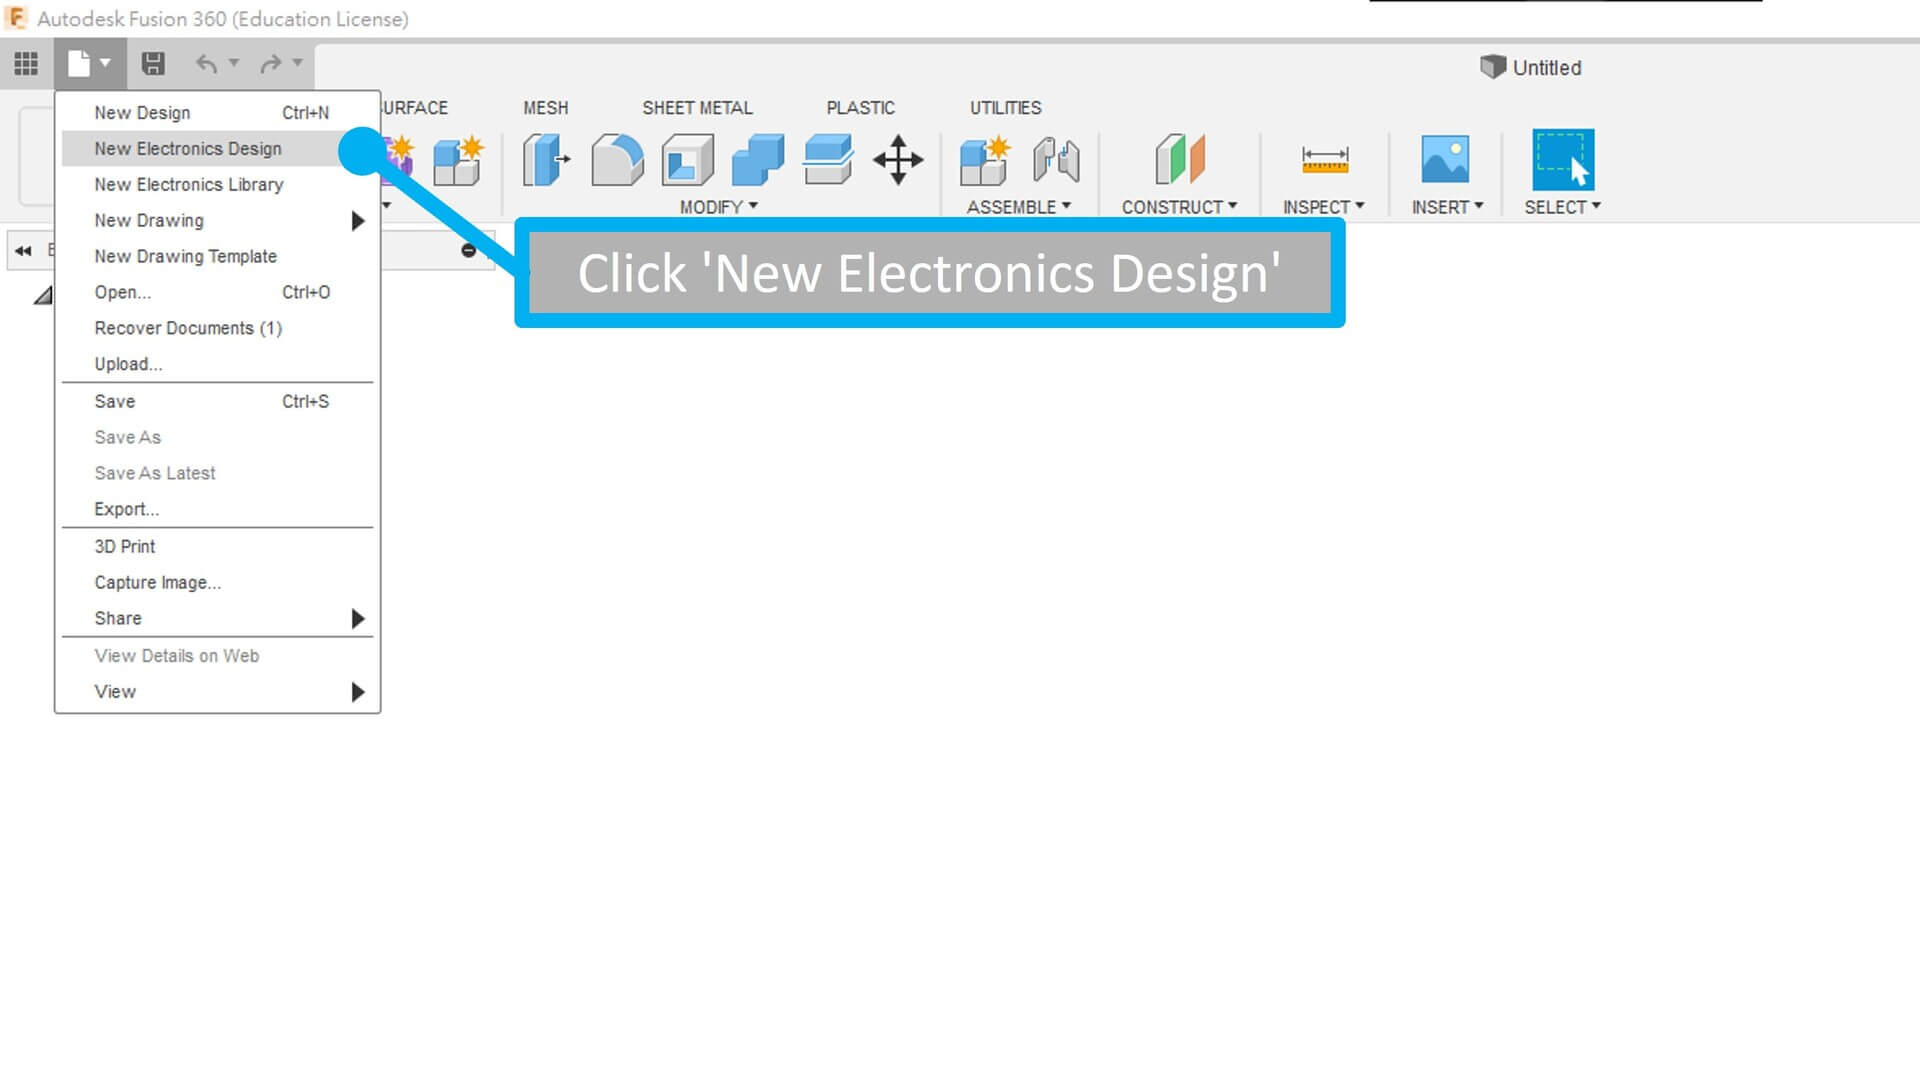 Design_New_Electronics_Design.jpg